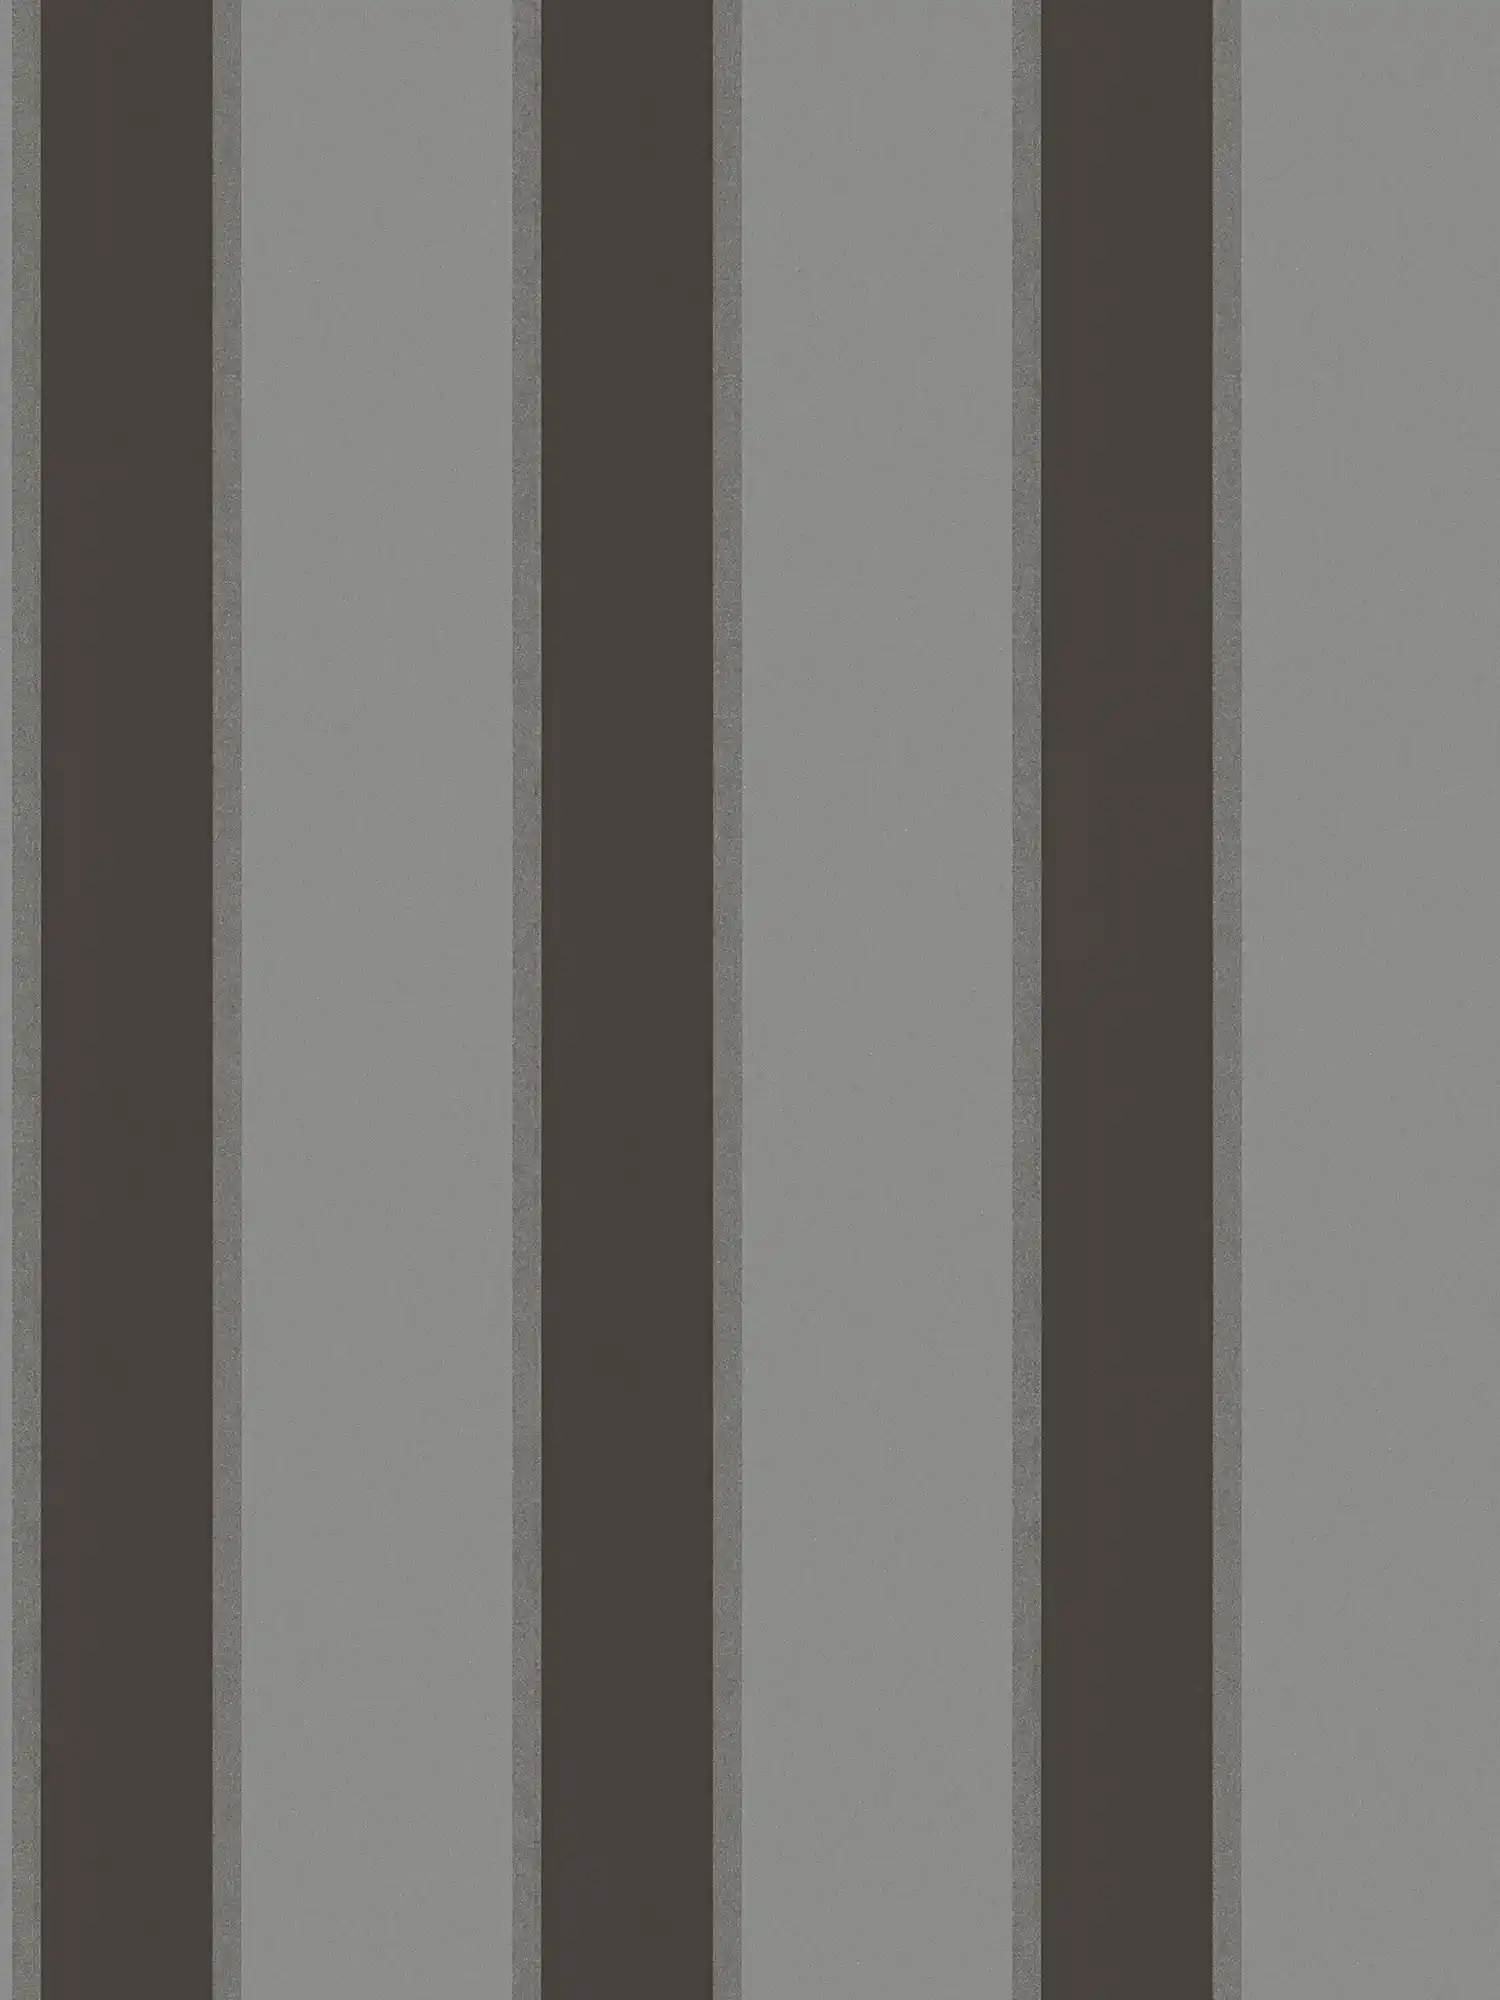 Metallic wallpaper with stripes pattern - grey, black
